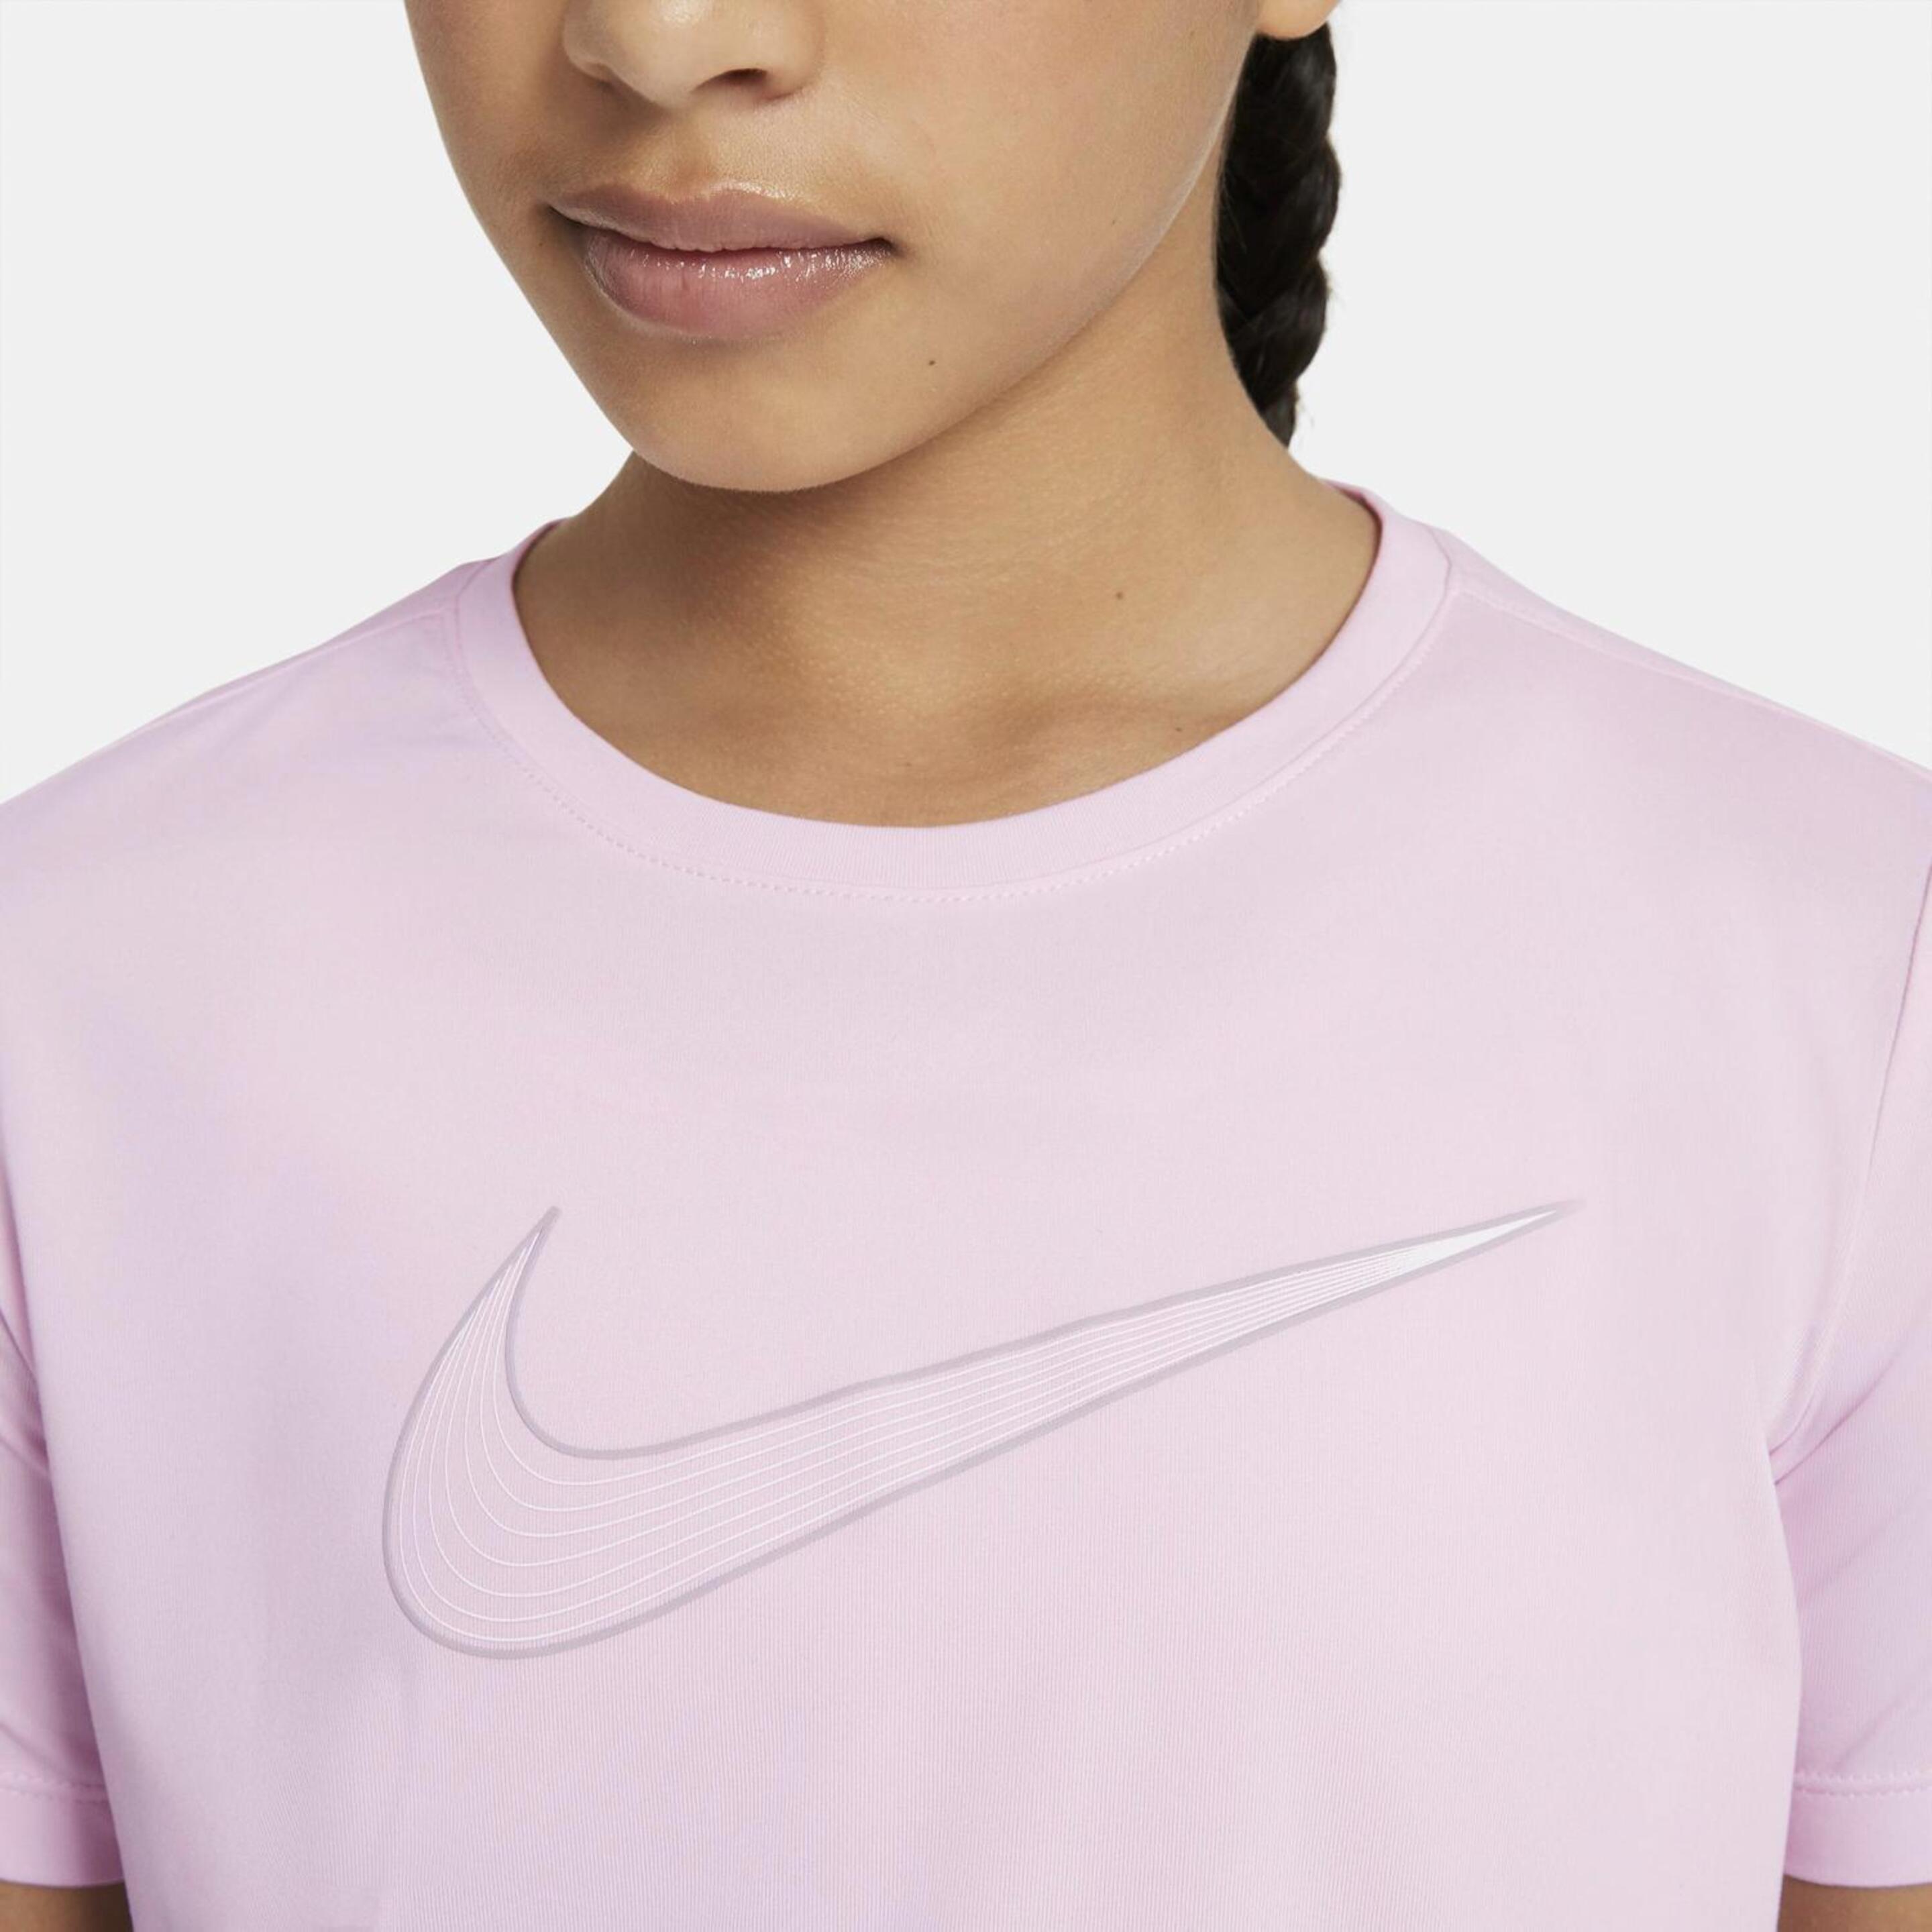 T-shirt Nike One Top